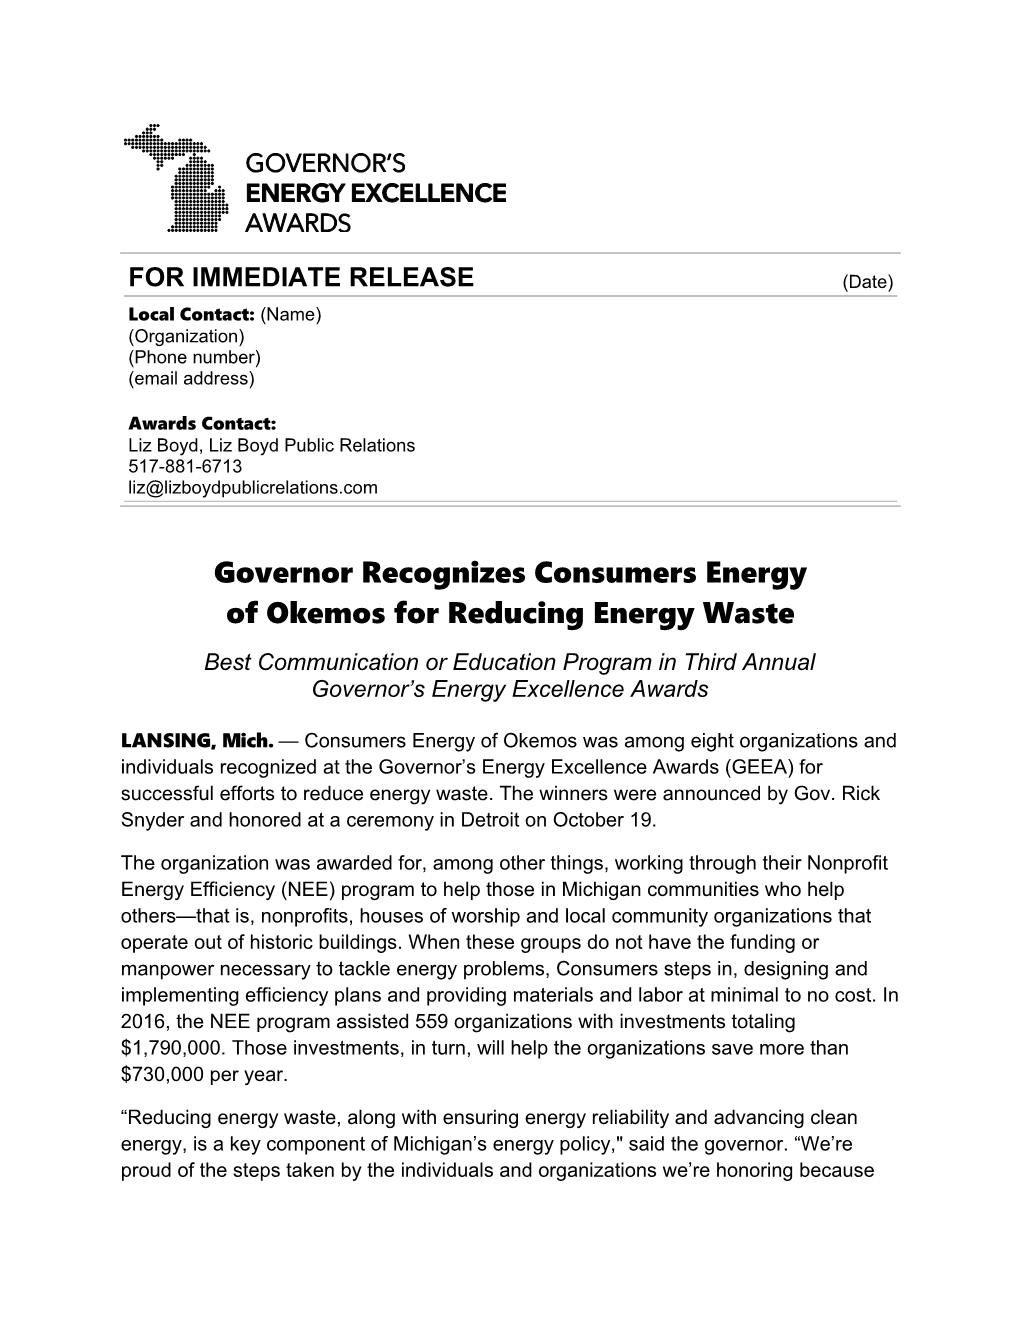 Governor Recognizes Consumers Energy